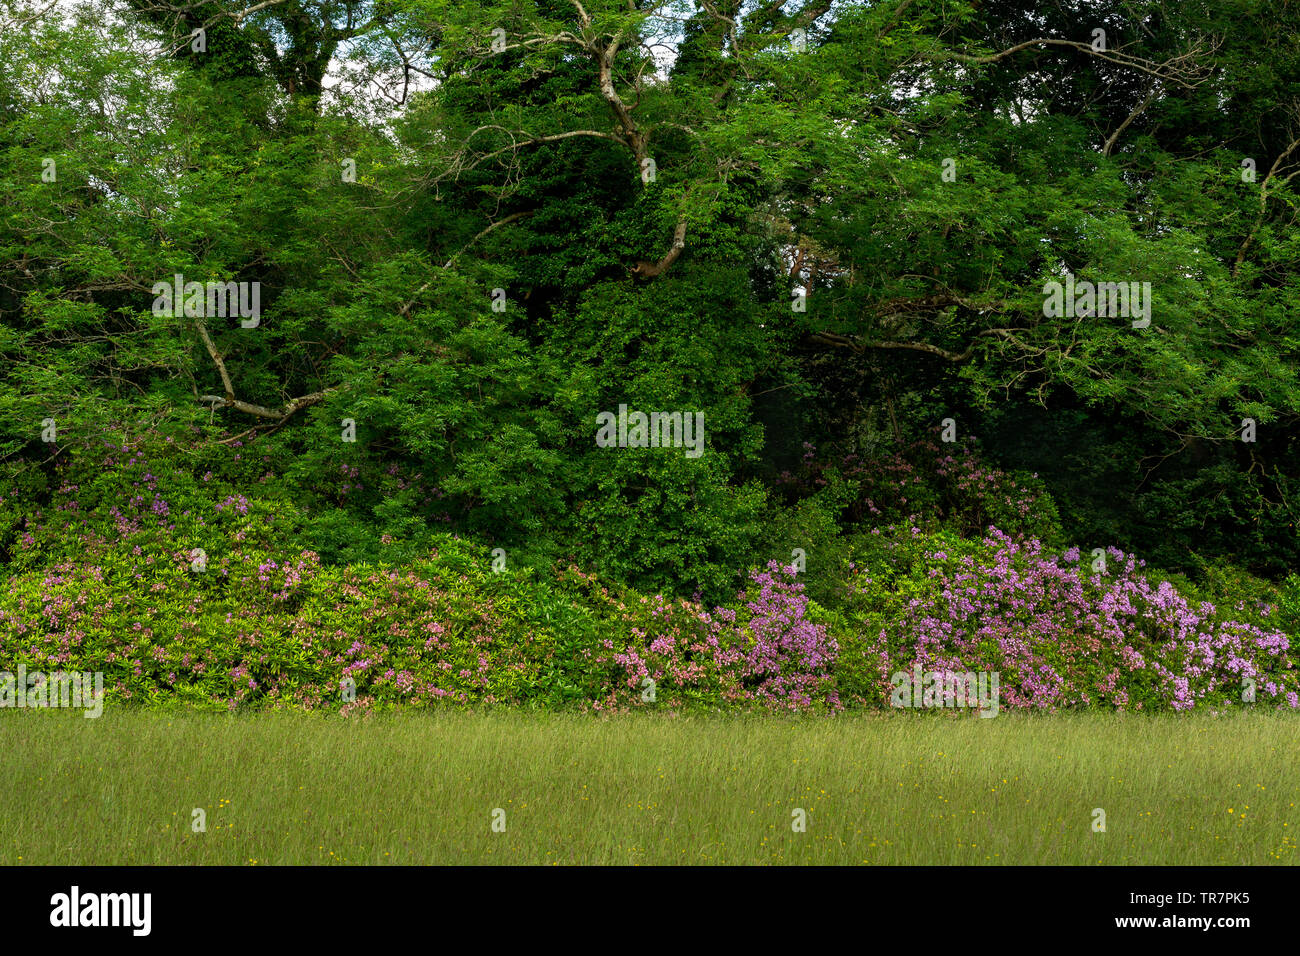 Non-native harmful invasive Rhododendron infestation in Killarney National Park, County Kerry, Ireland Stock Photo